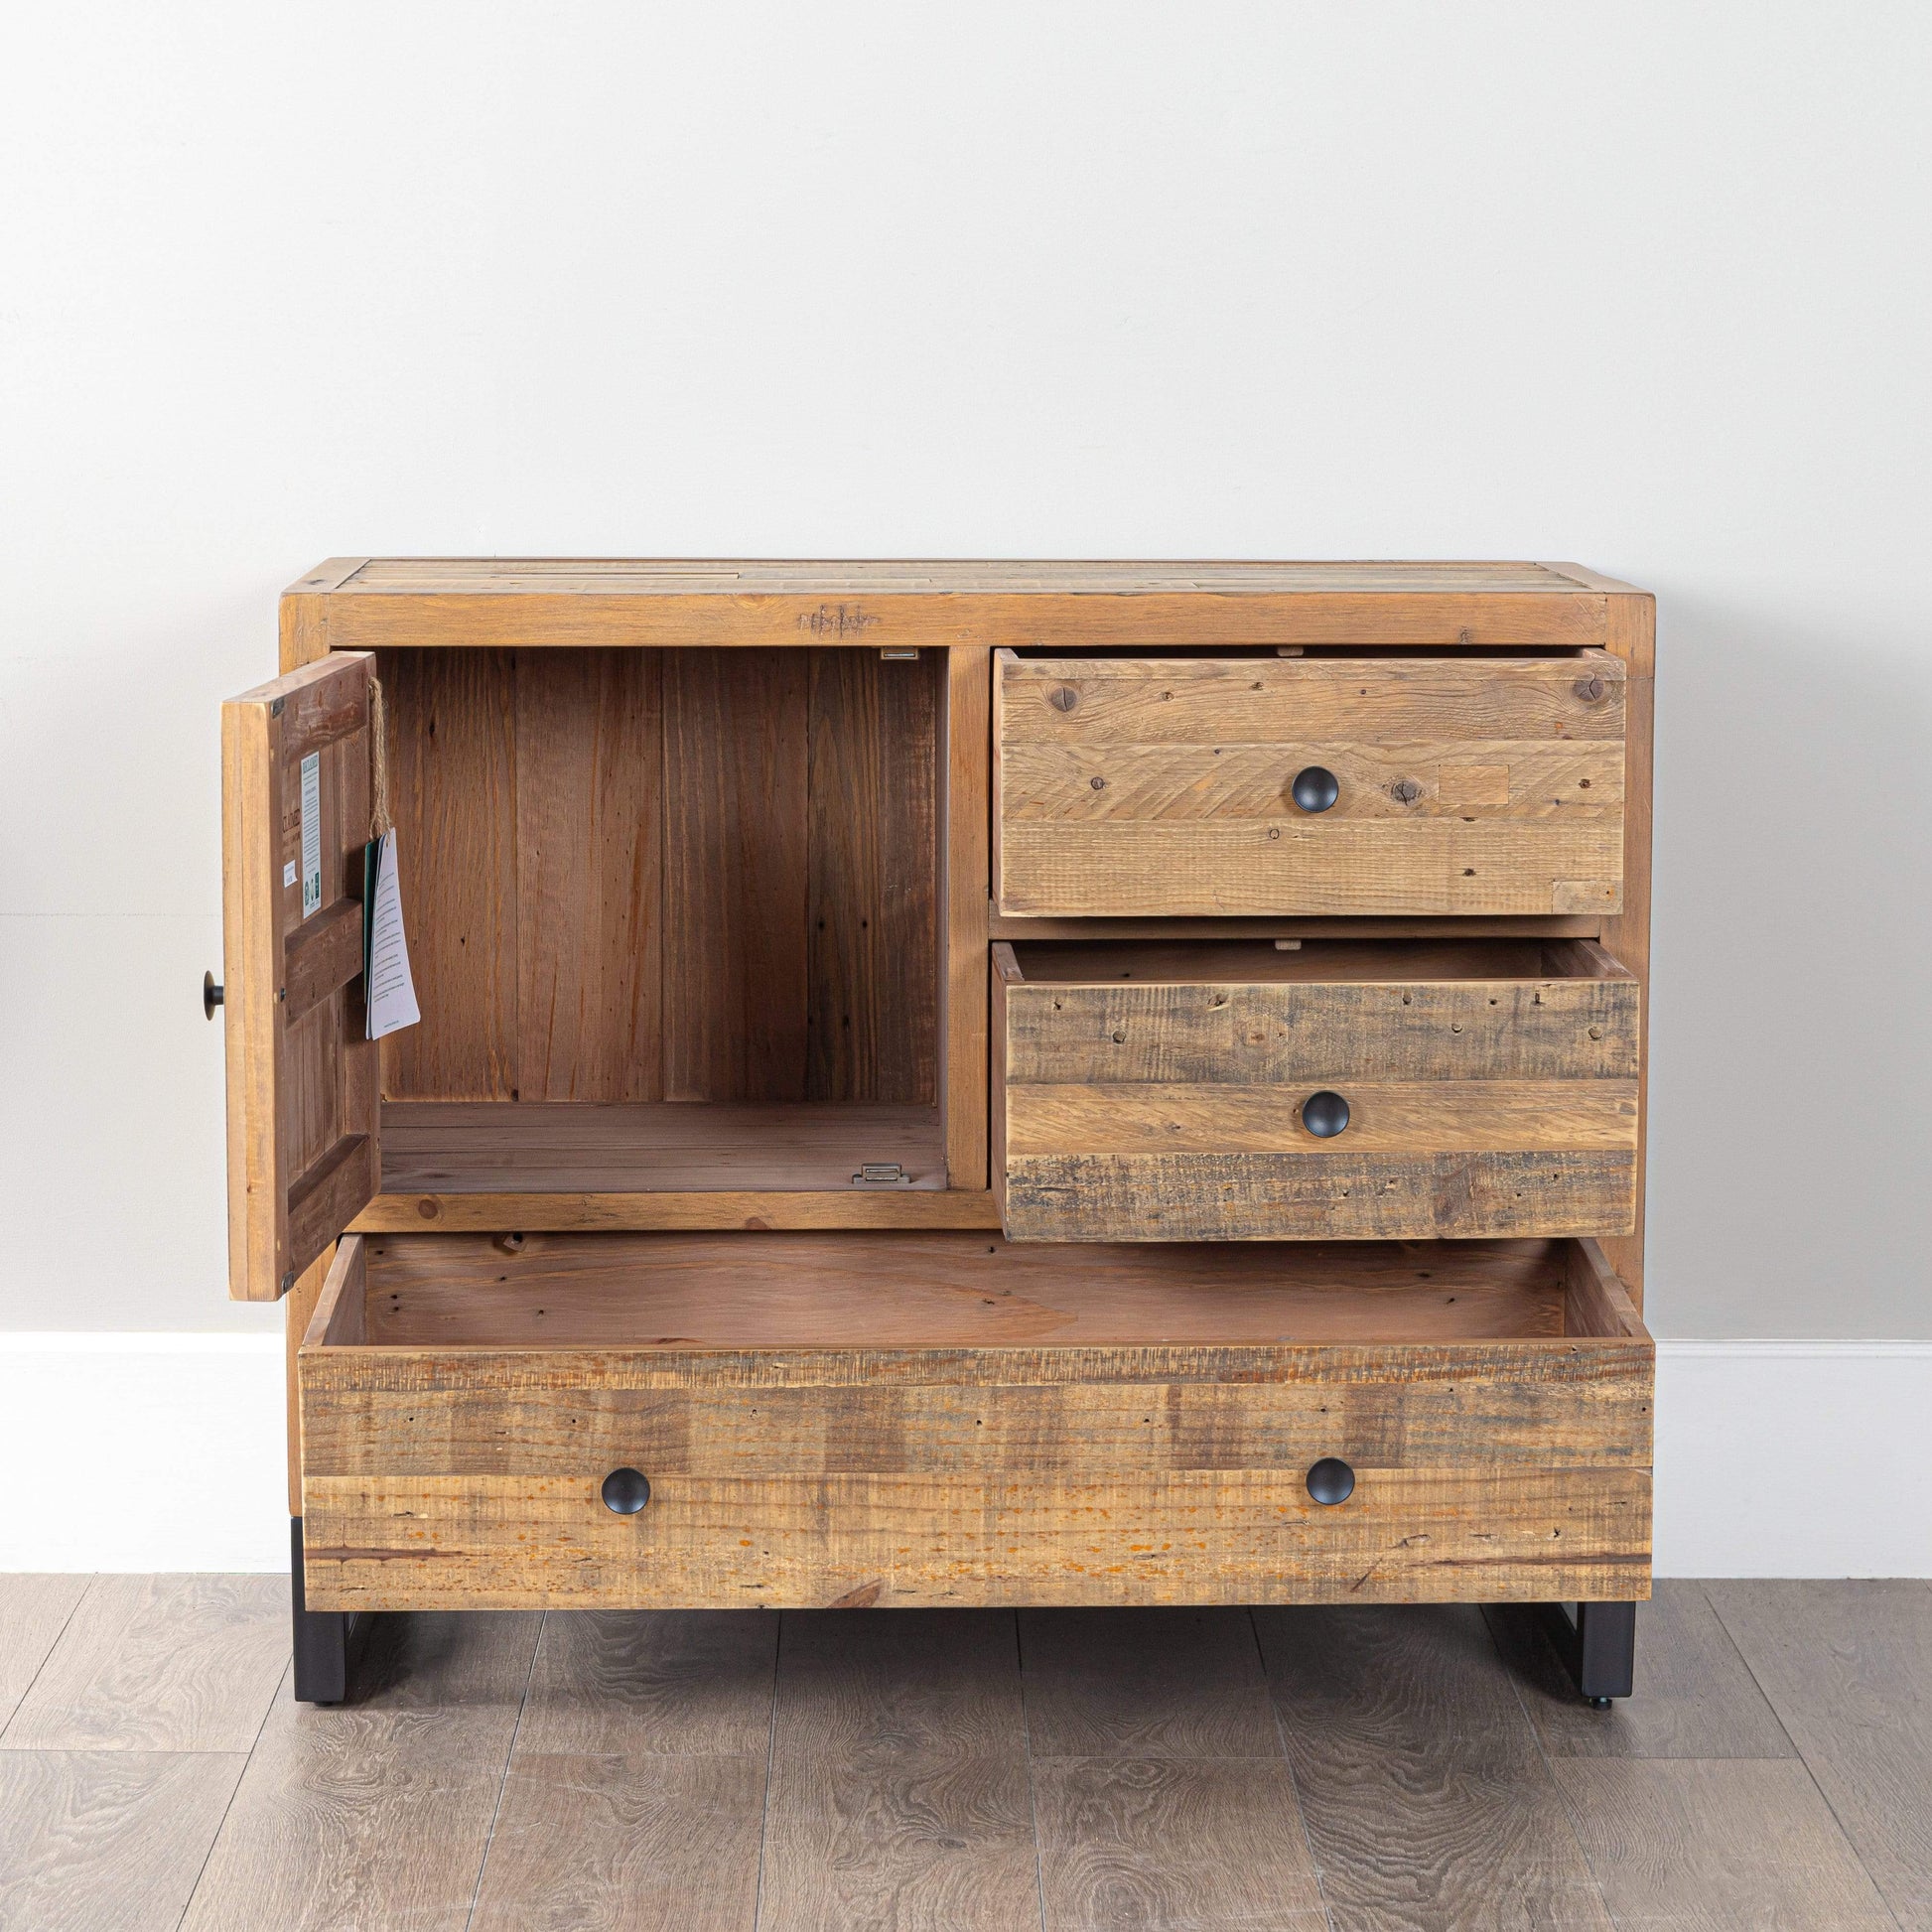 Furniture  -  Lincoln Narrow Sideboard  -  50151748